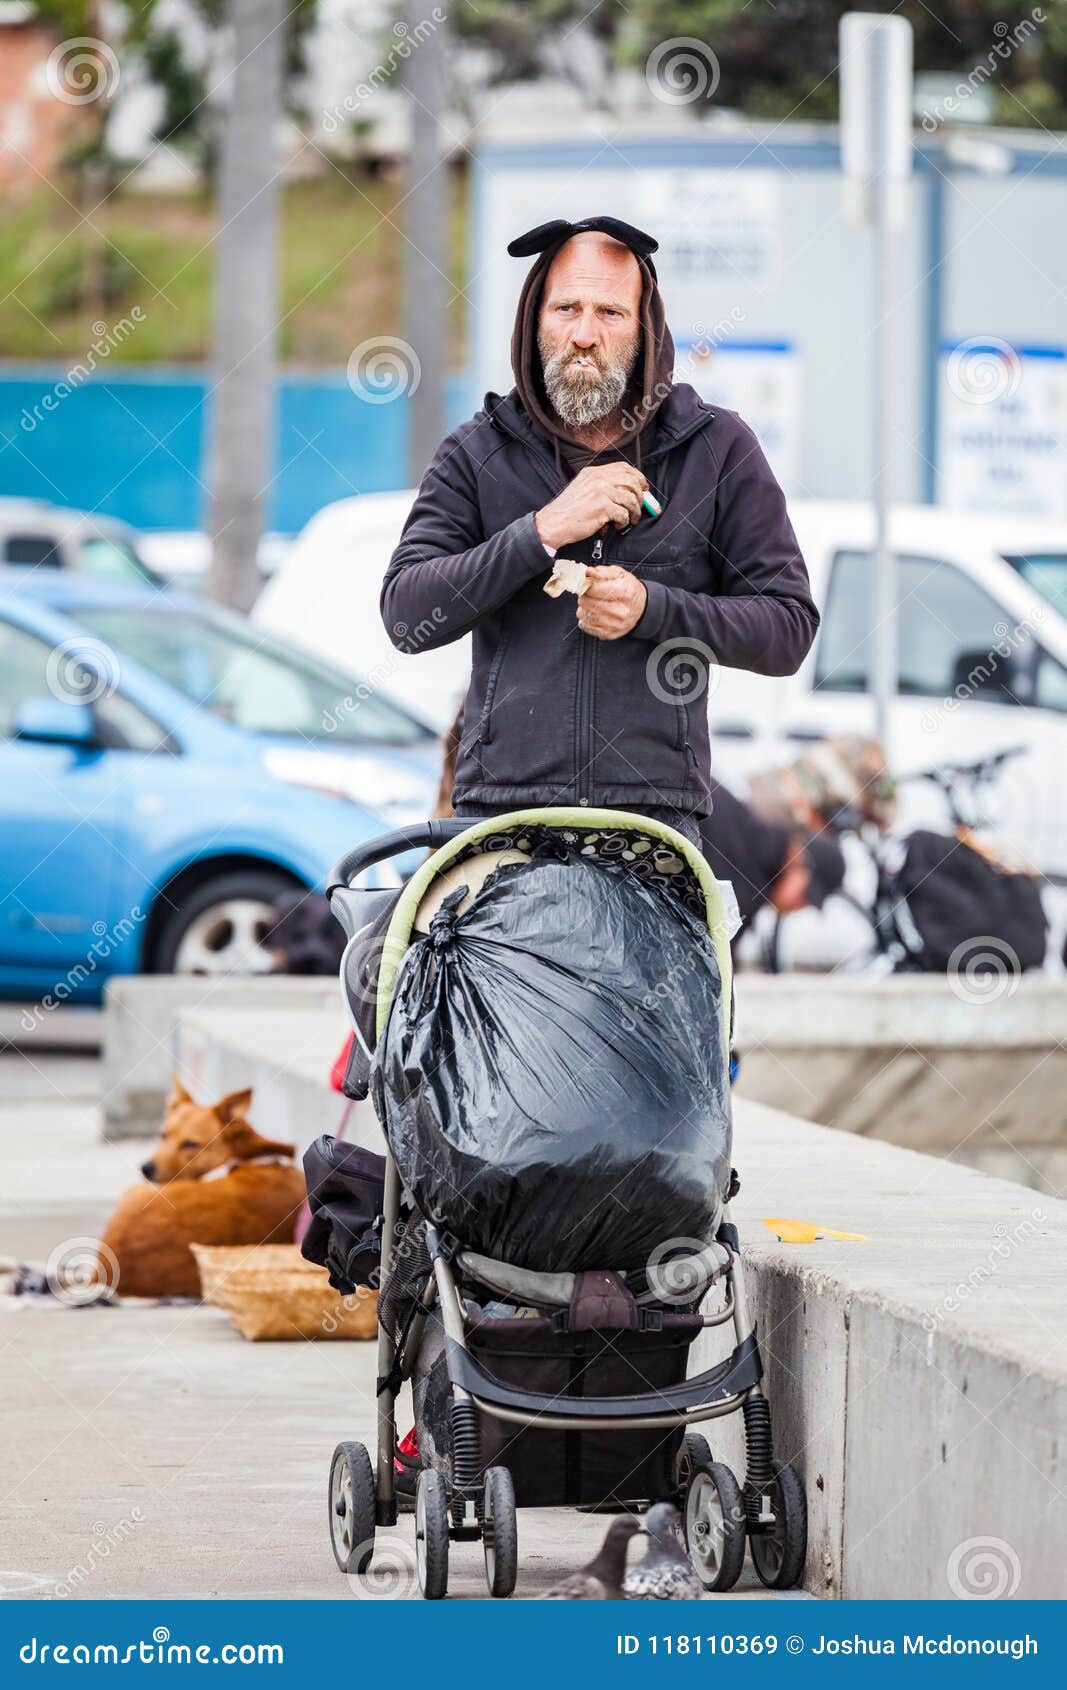 ocean-beach-san-diego-california-usa-may-homeless-man-lites-up-cigarette-pushing-his-belongings-old-stroller-along-118110369.jpg